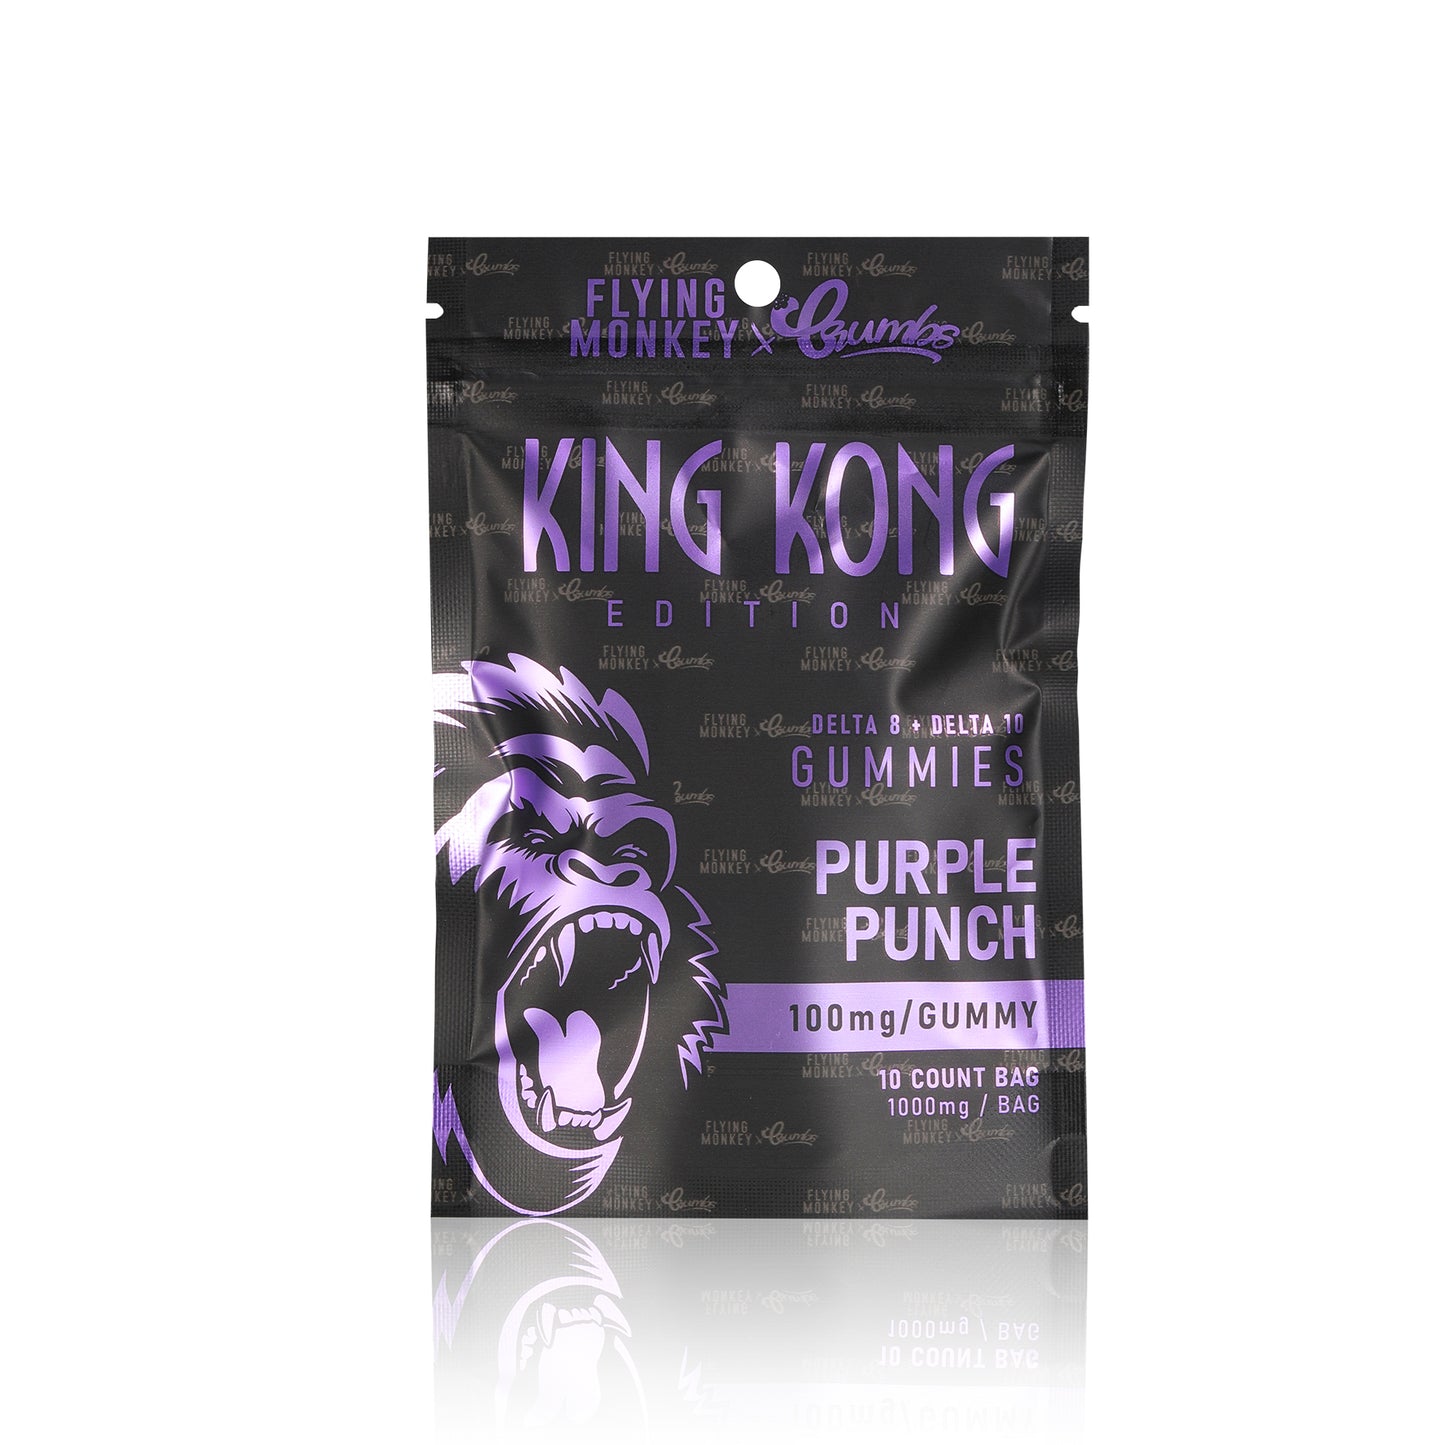 Flying Monkey King Kong 100mg gummy bag in Purple Punch flavor